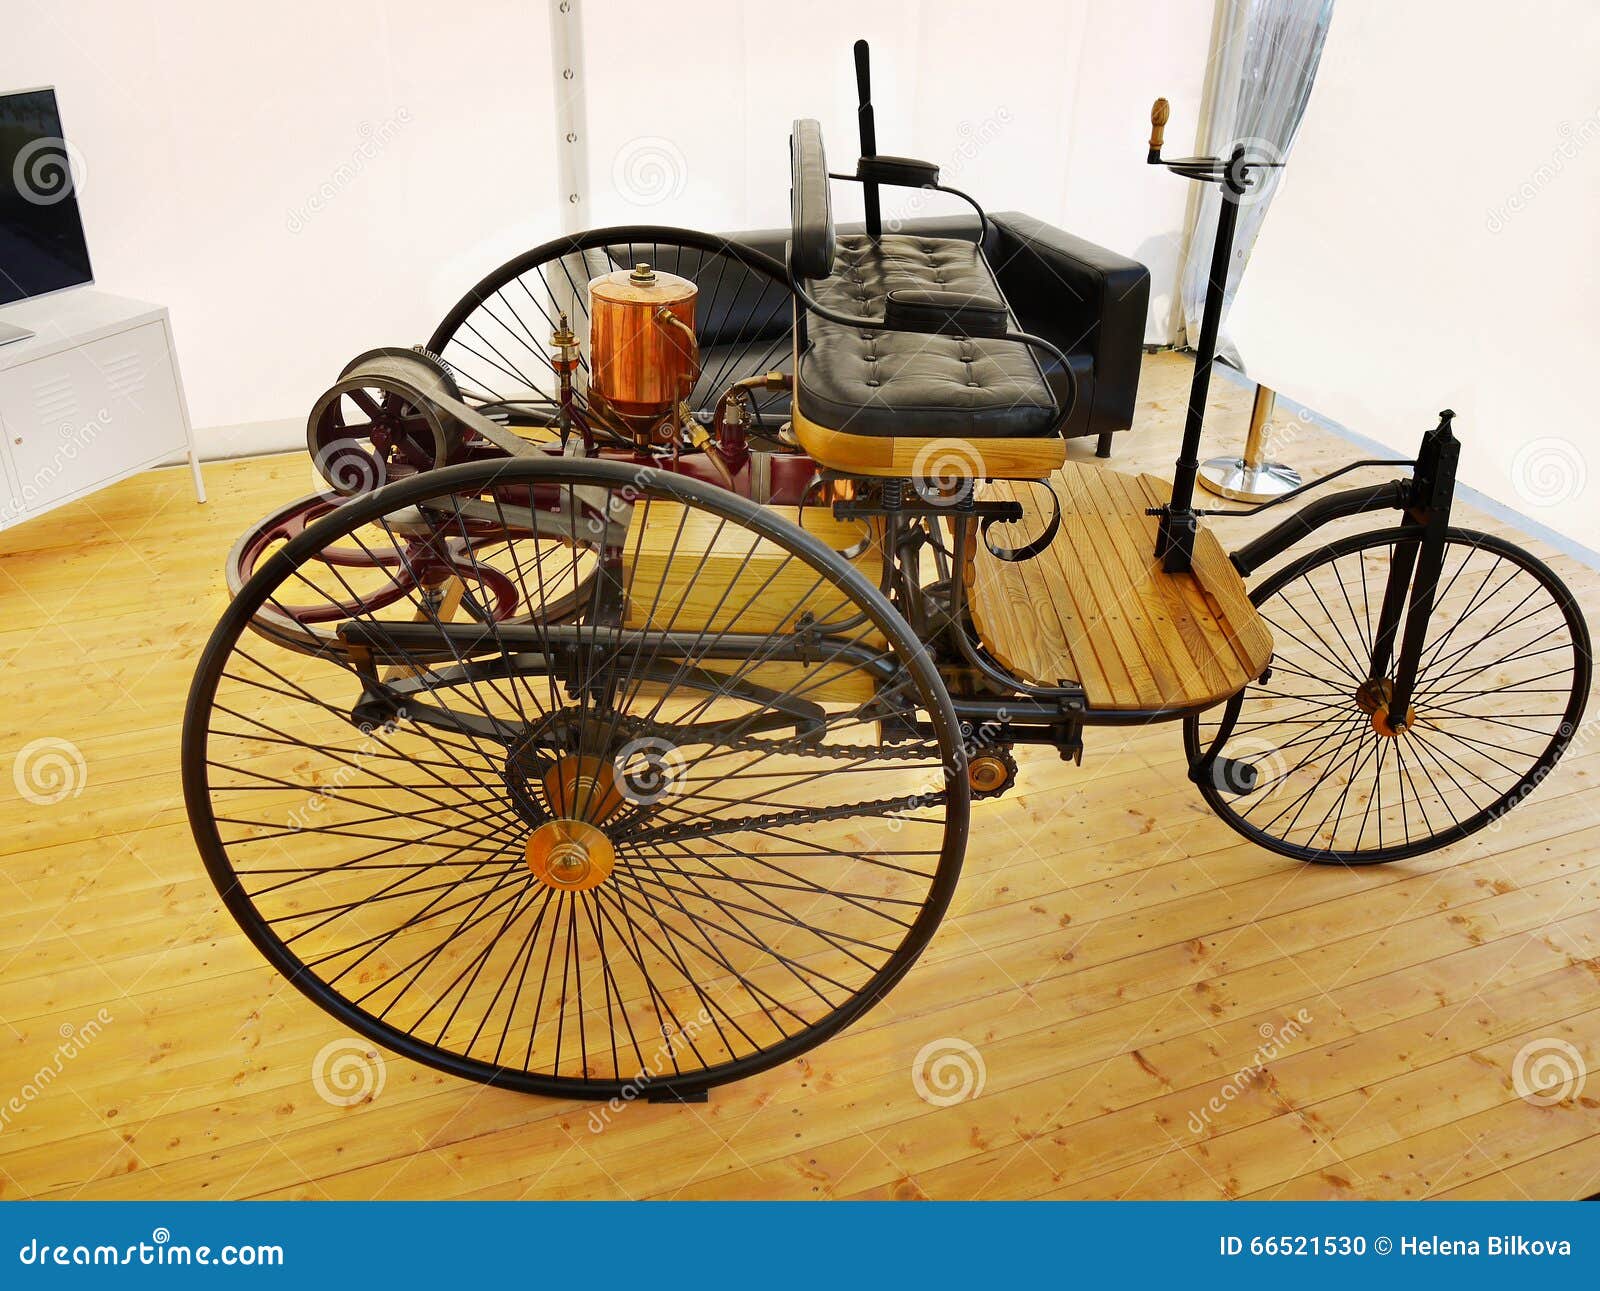 Benz Patent Motor Car, Antique Cars Editorial Image - Image of wheeled, symbol: 66521530